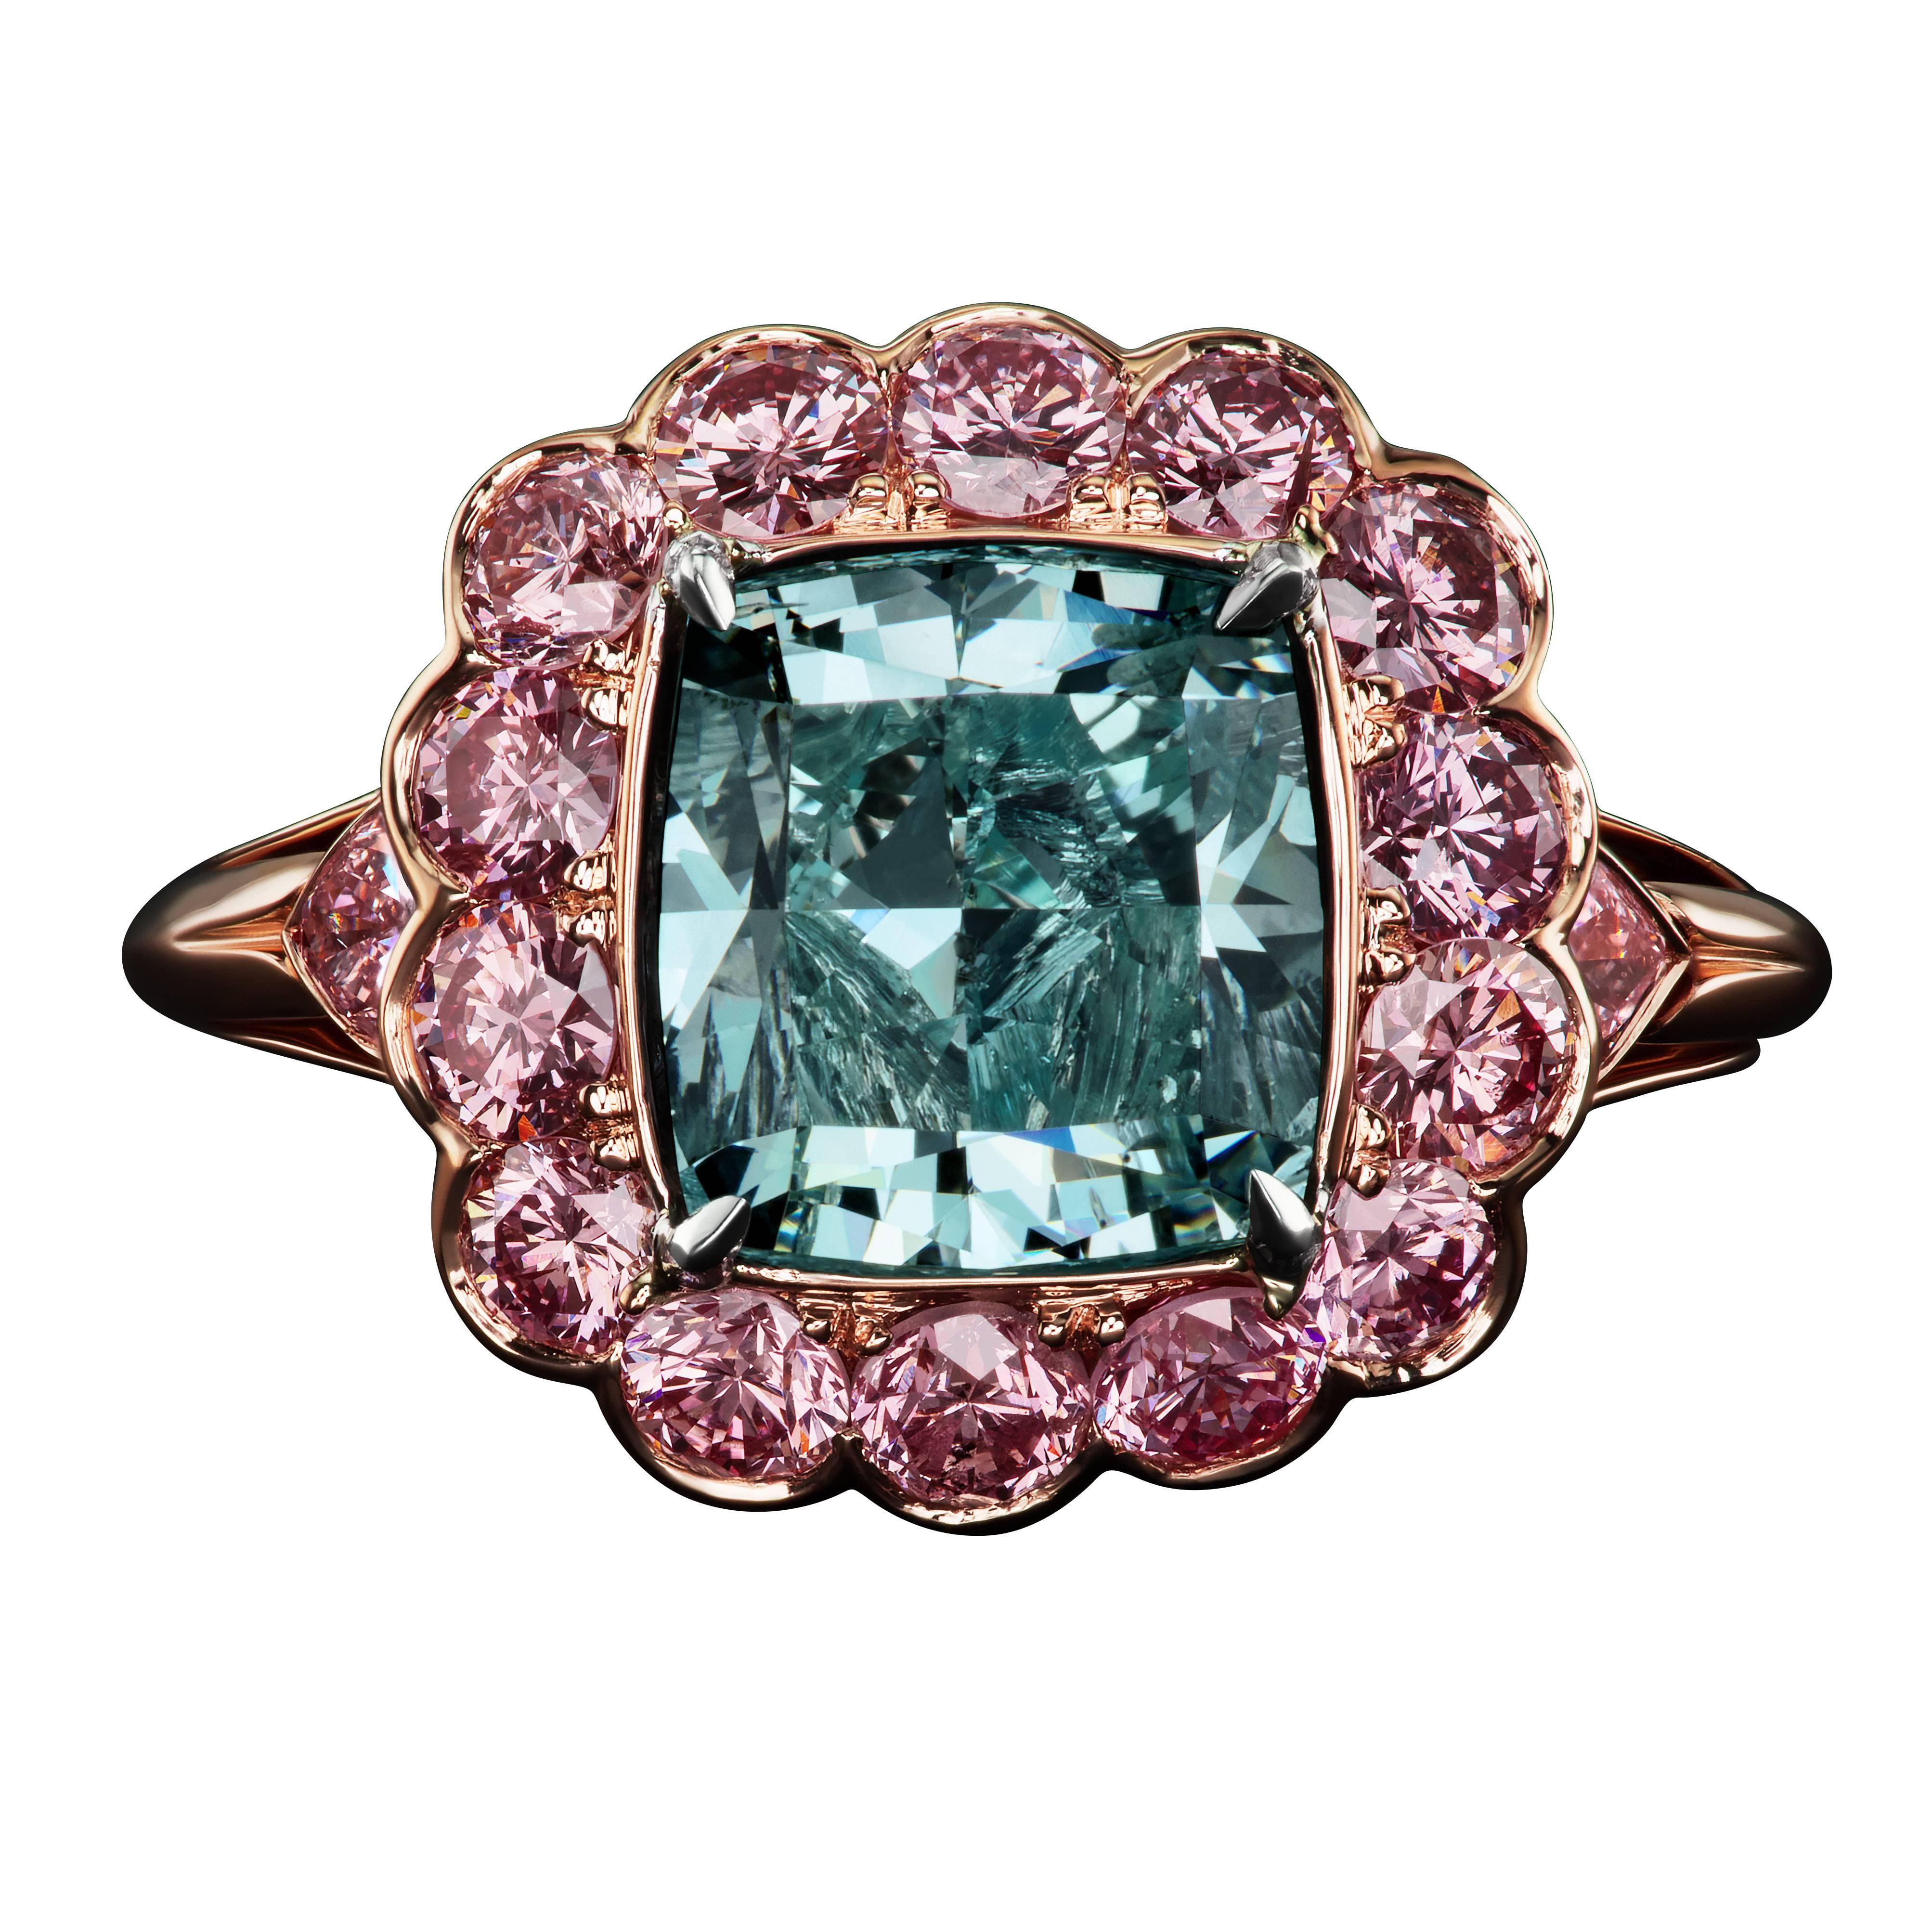 David Rosenberg 4.16 Carat GIA Fancy Intense Blue Green Cushion Cut Diamond Ring